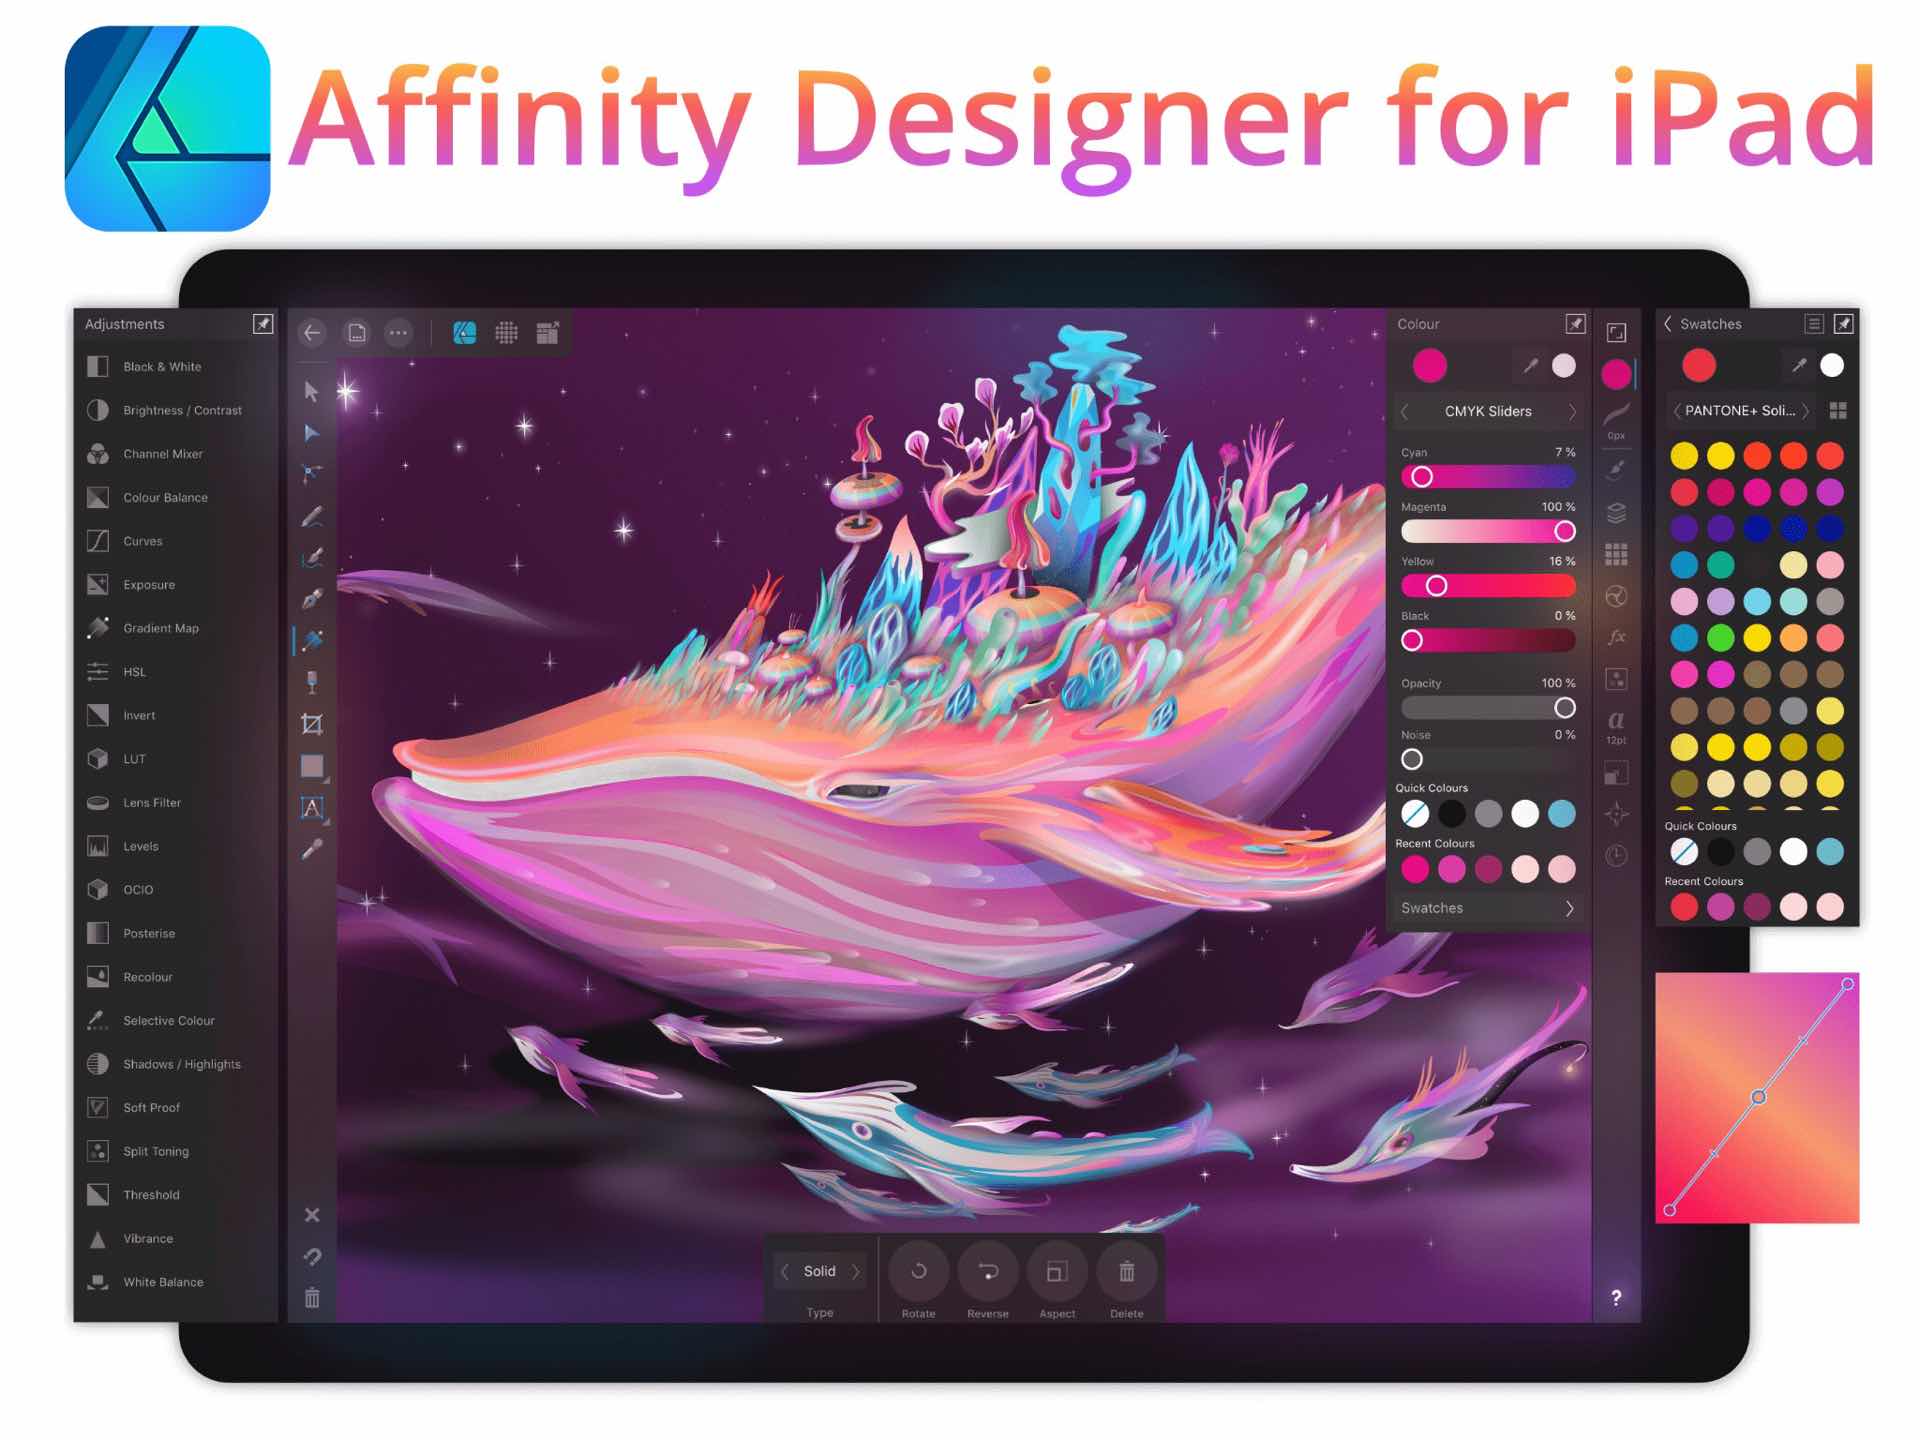 sakar mikrofon avuç içi  Affinity Designer for iPad — Tools and Toys